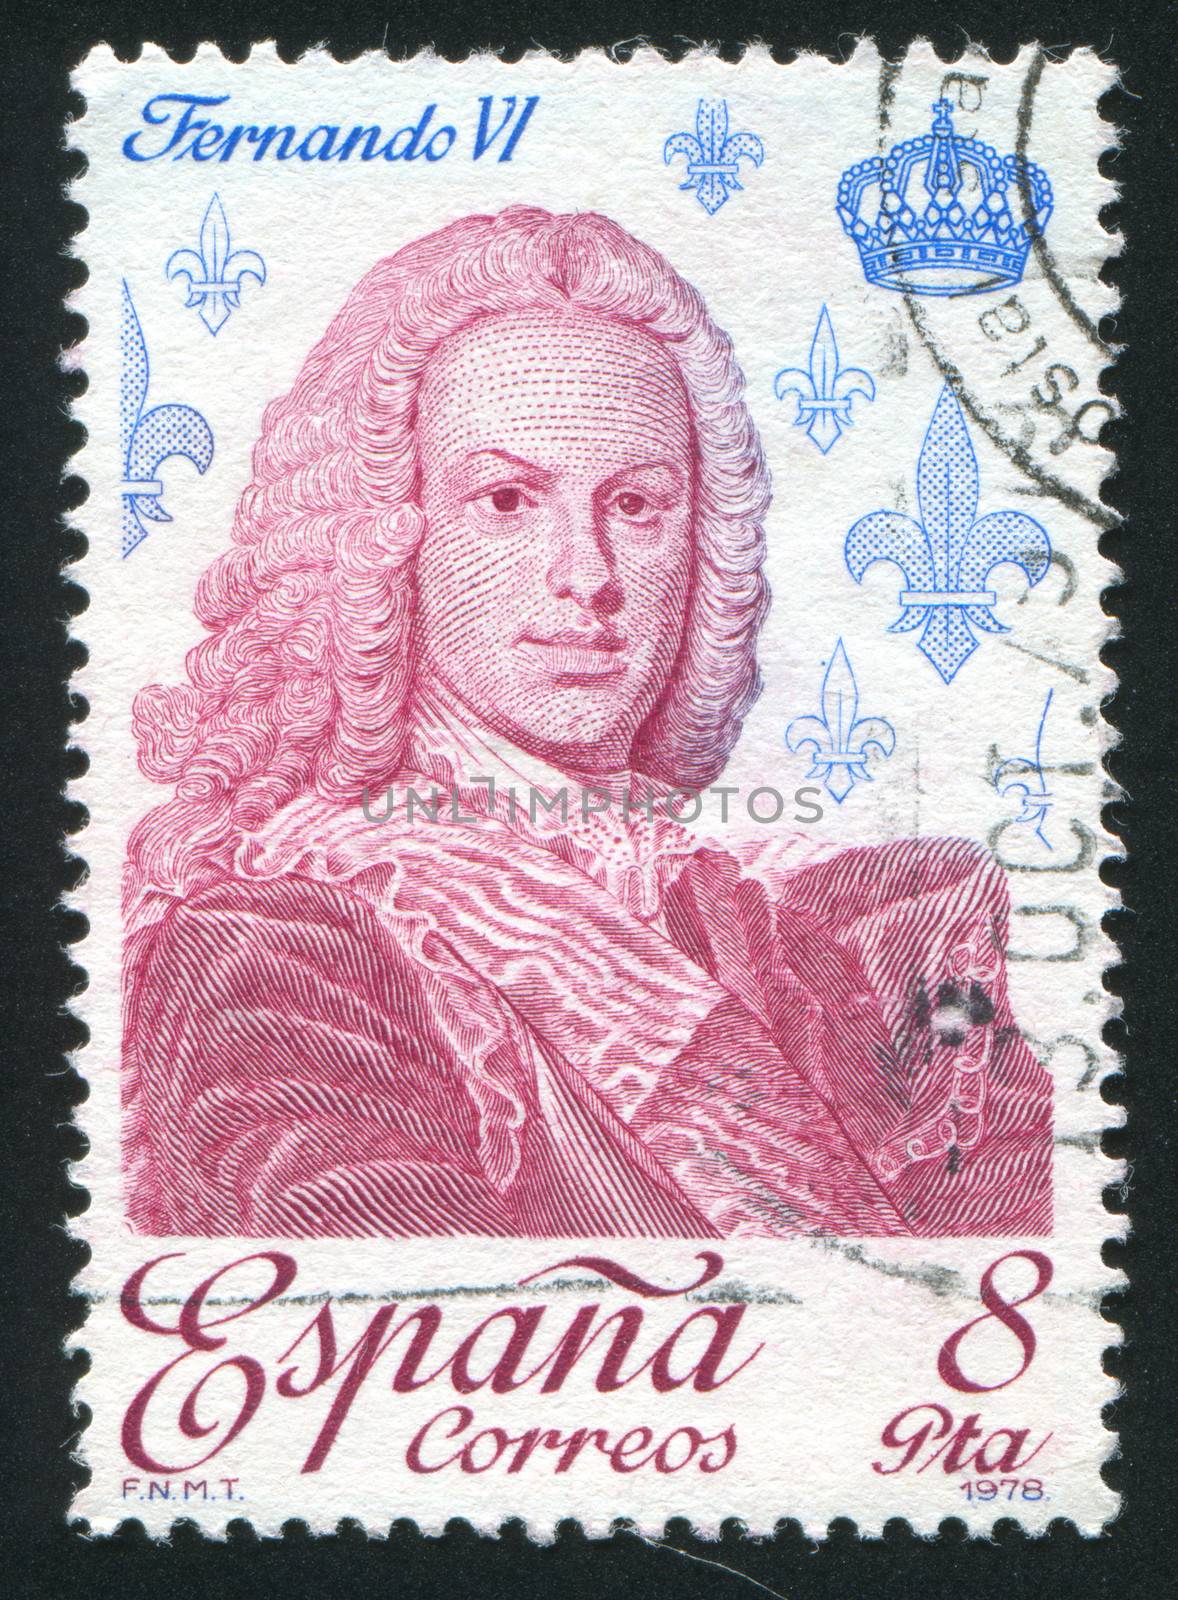 SPAIN - CIRCA 1978: stamp printed by Spain, shows Ferdinand VI, circa 1978